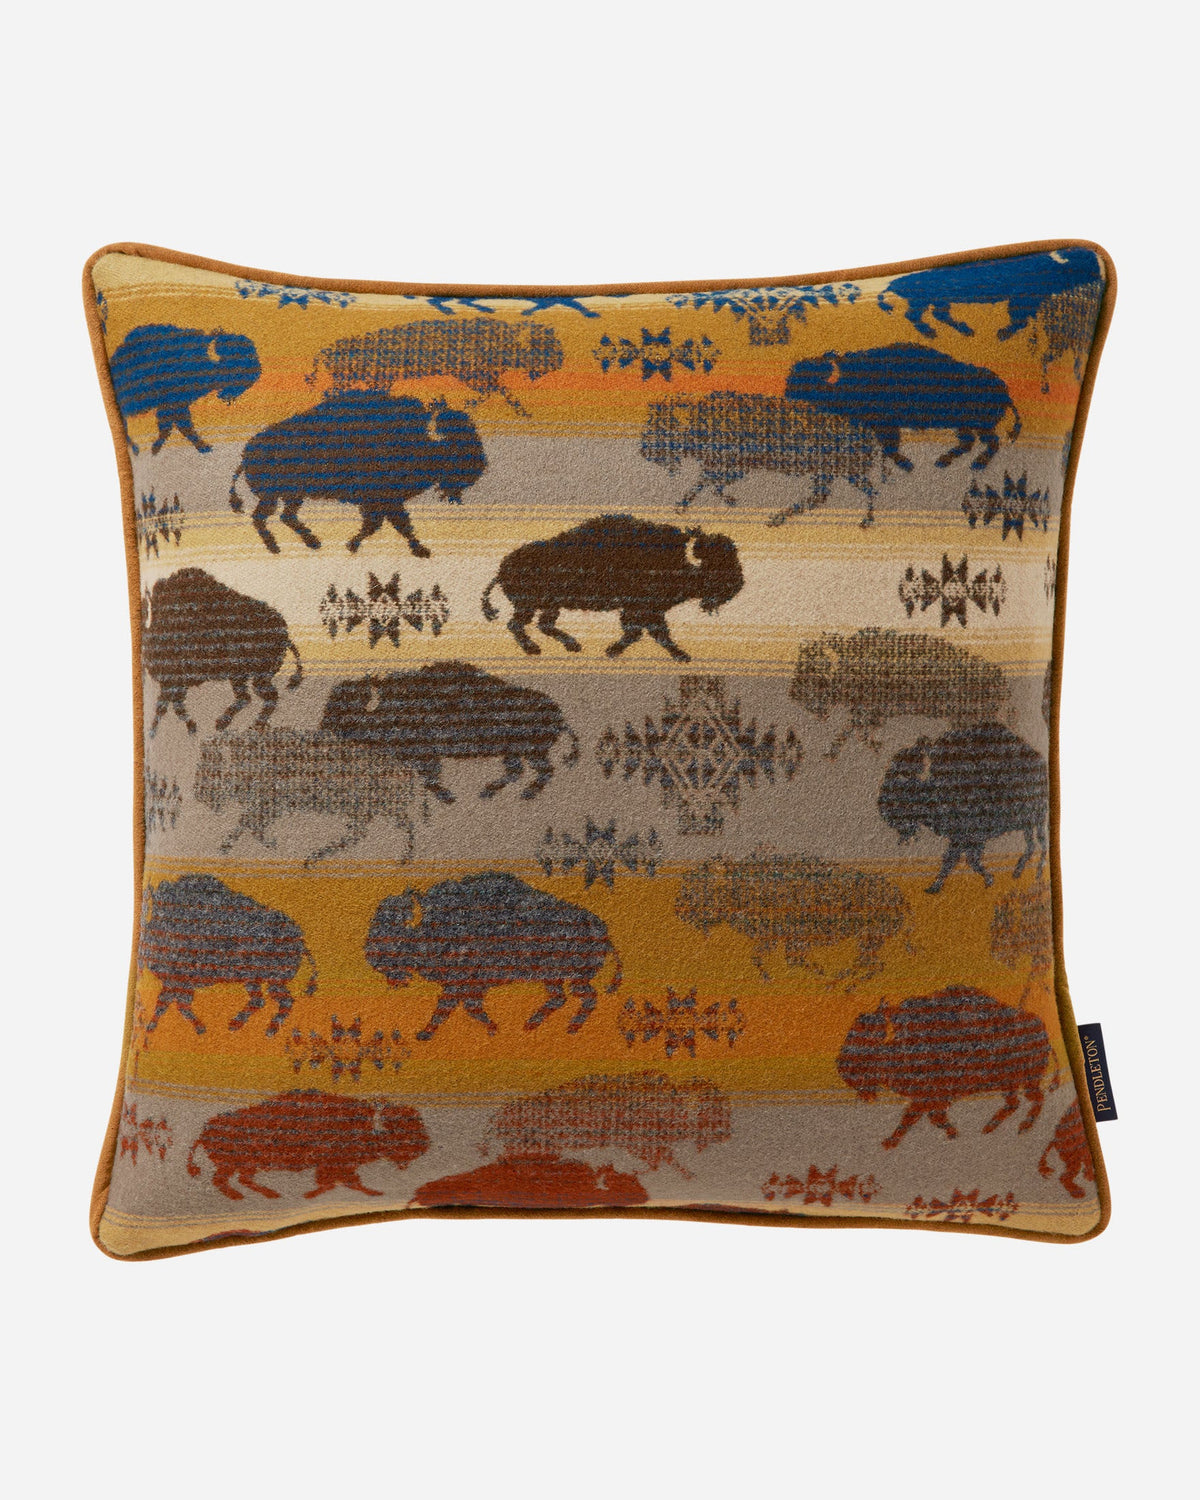 Bison Rush Hour Pendleton Throw Pillow made in Oregon, USA - Blue Mountain Brands USA Home Decor